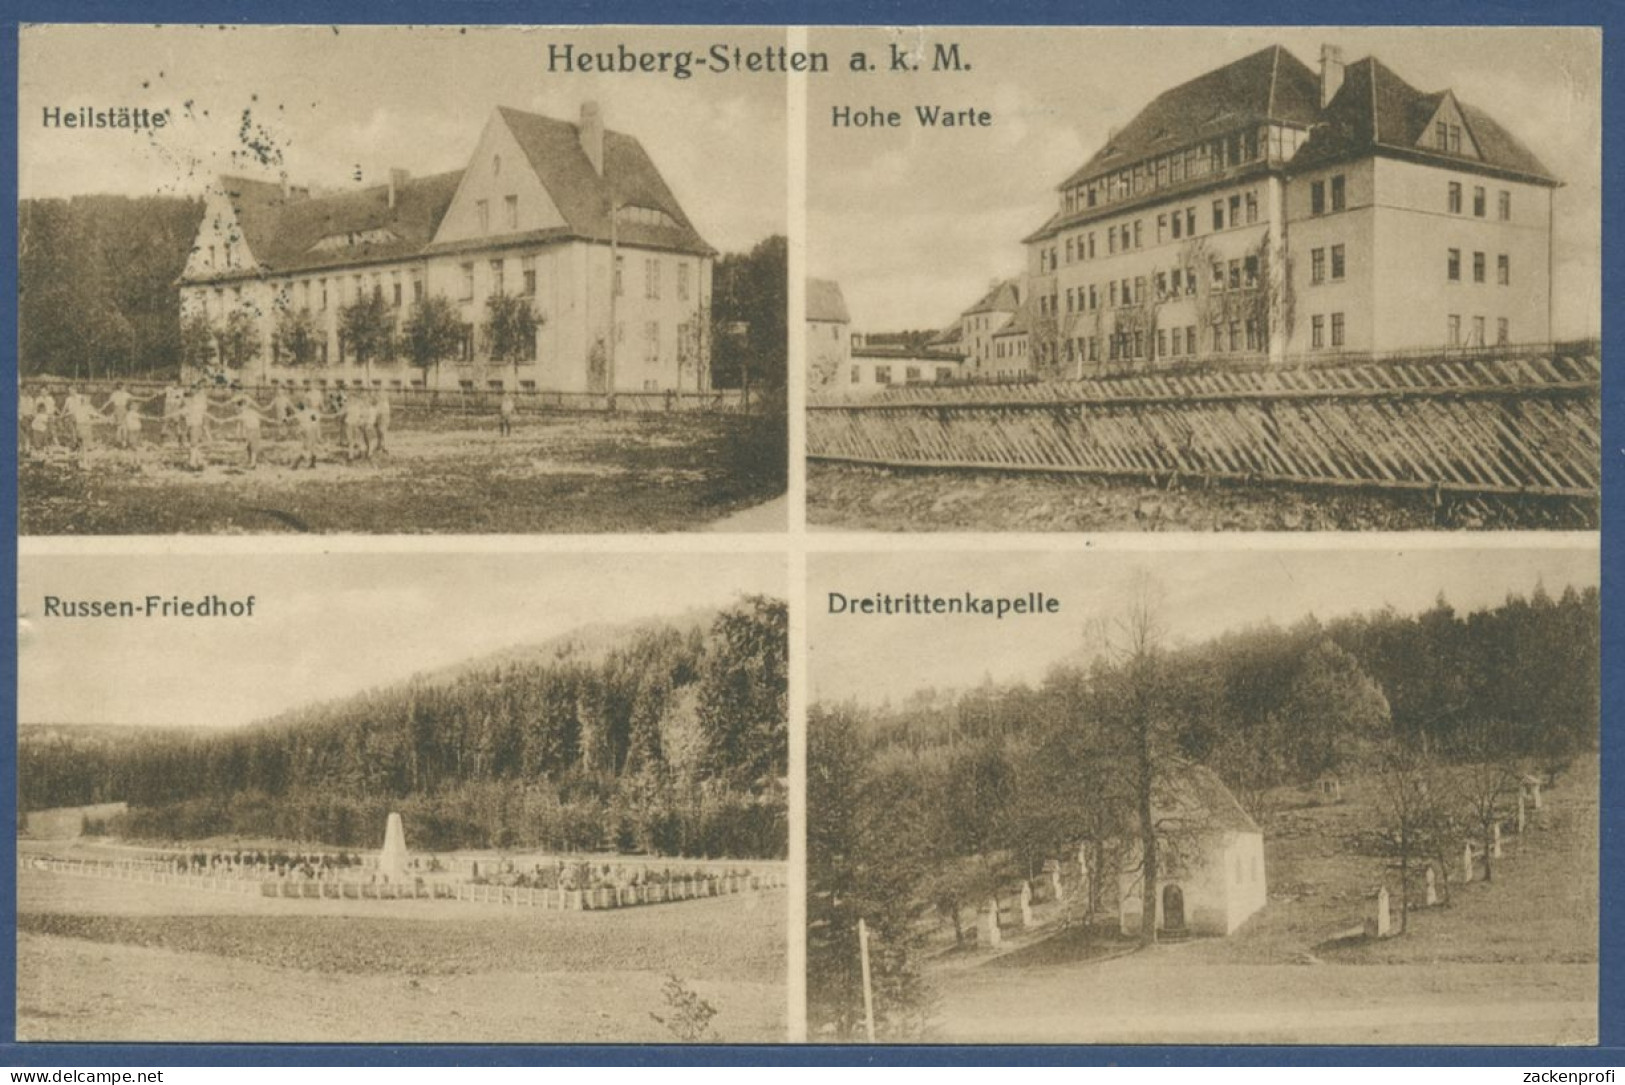 Heuberg Stetten A. K. M. Hohe Warte Dreitrittenkapelle, Gelaufen 1927 (AK2229) - Sigmaringen